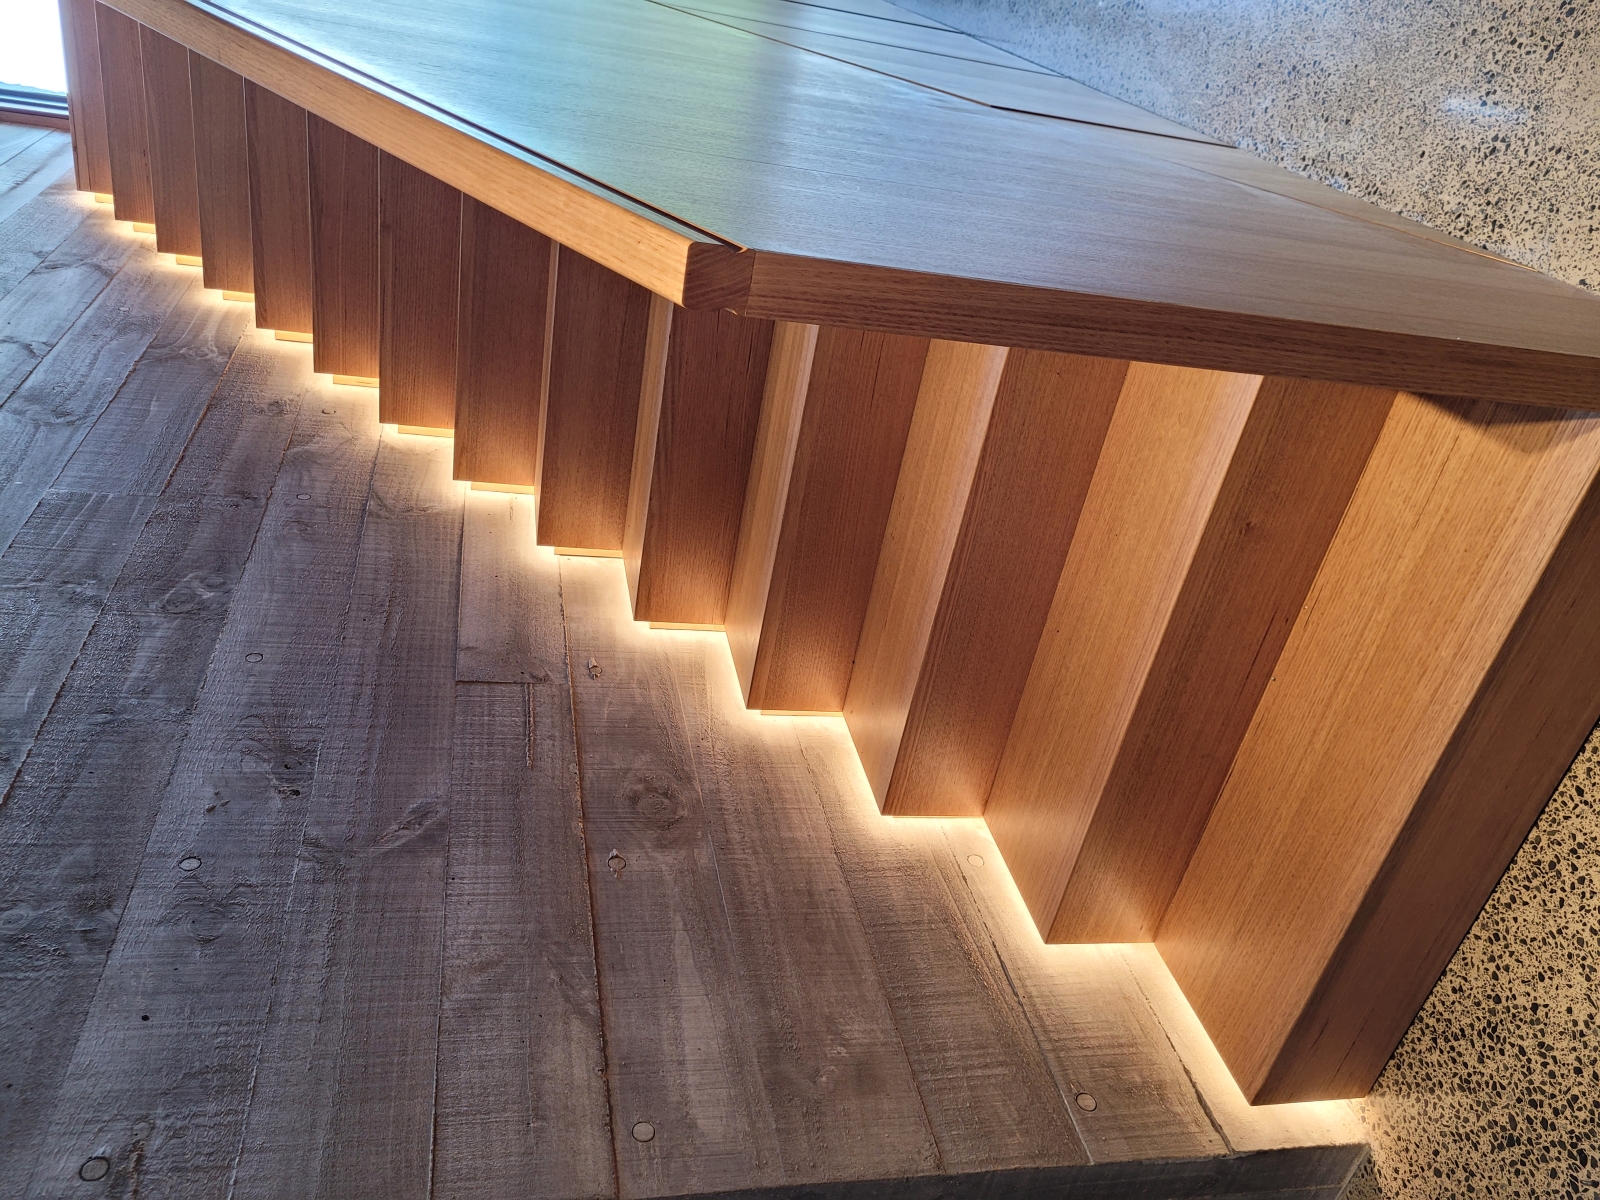 Custom stair design